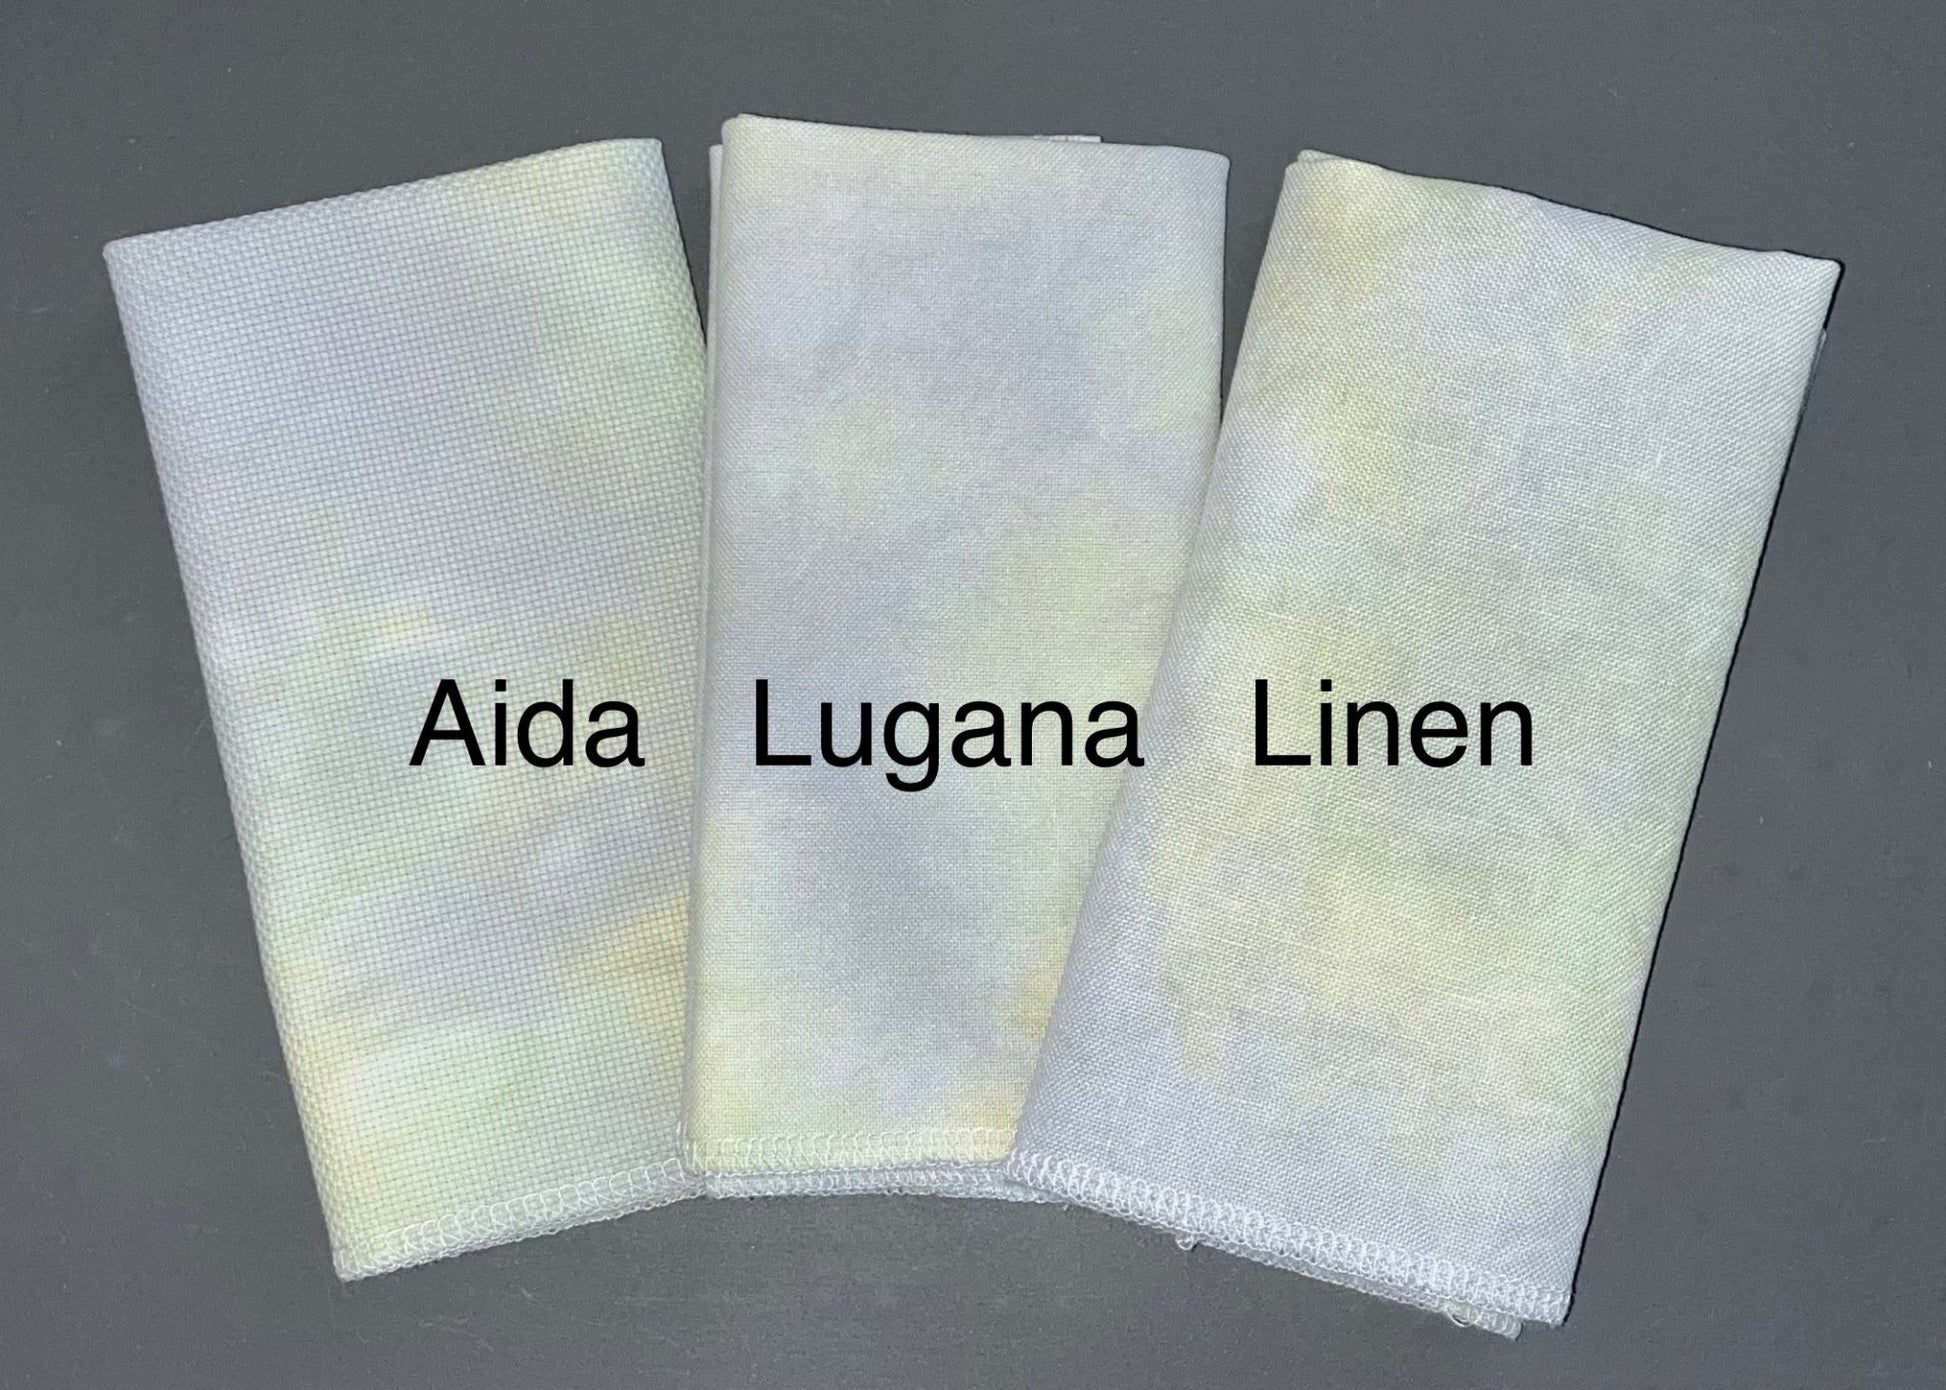 32ct lugana - 18x27 - February FOTM - Dyeing for Cross Stitch